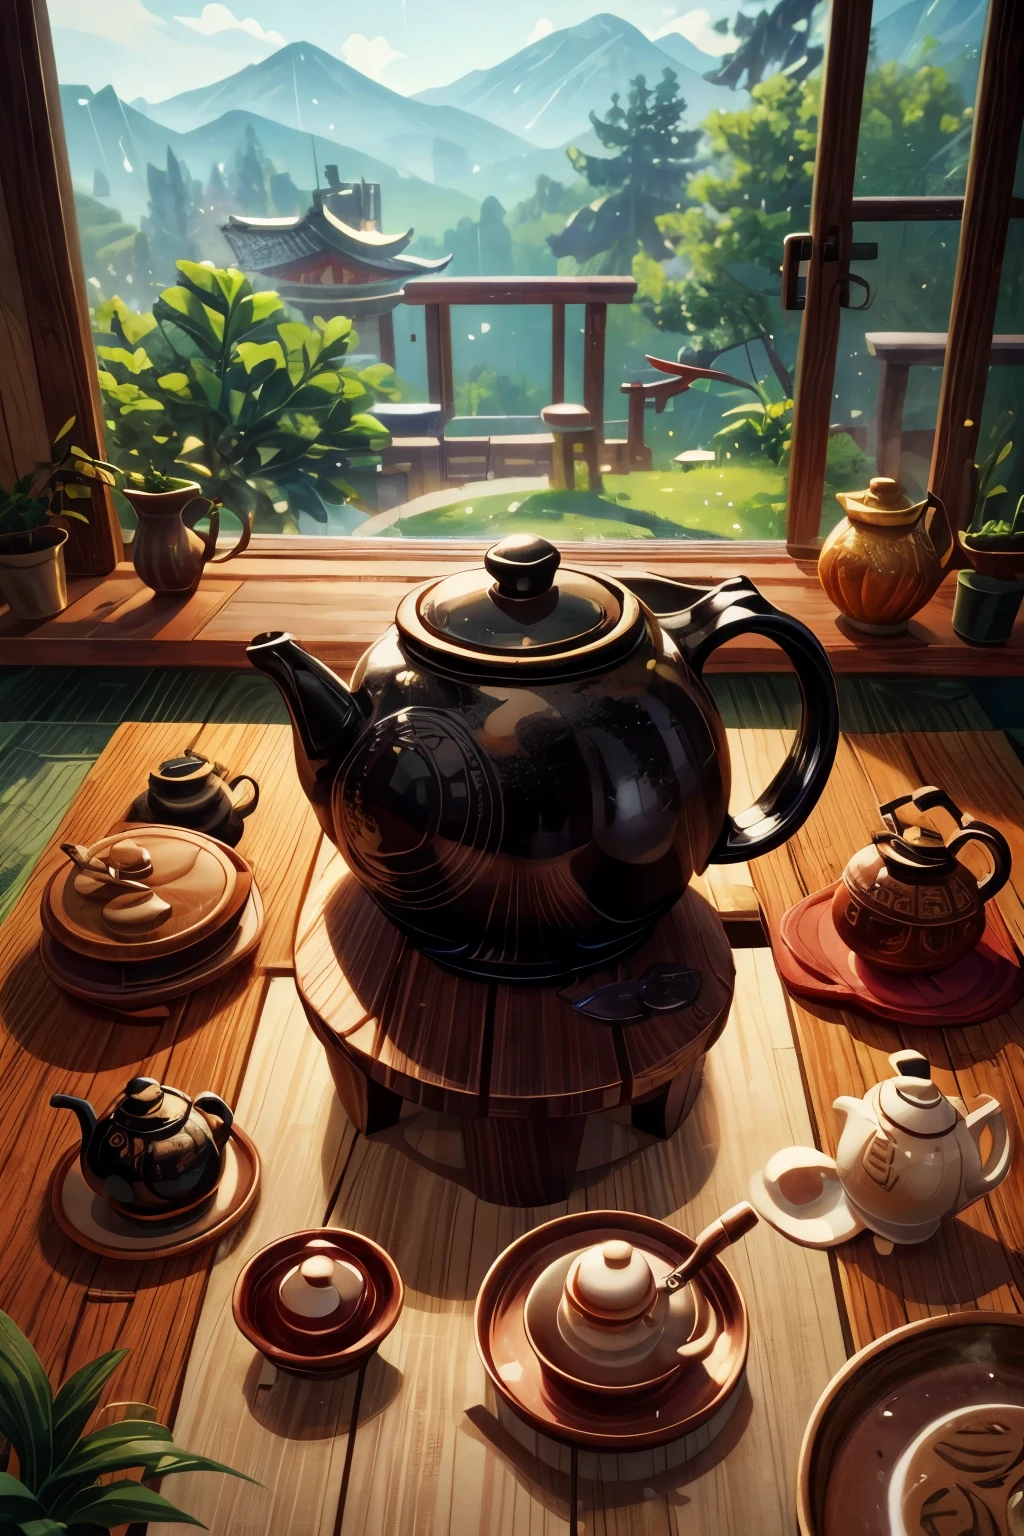 On the bowl is placed a Teekanne, inspiriert von Sesshū Tōyō, Wasserkocher, large black Wasserkocher on the hearth, Teekanne, Teekanne, Teekanne, wunderschönes Teeservice aus Porzellan, Teekanne: 1, inspiriert von Renzheng Doben, Inspiriert von Kaiser Xuande, Keramik, smooth glazed Keramik